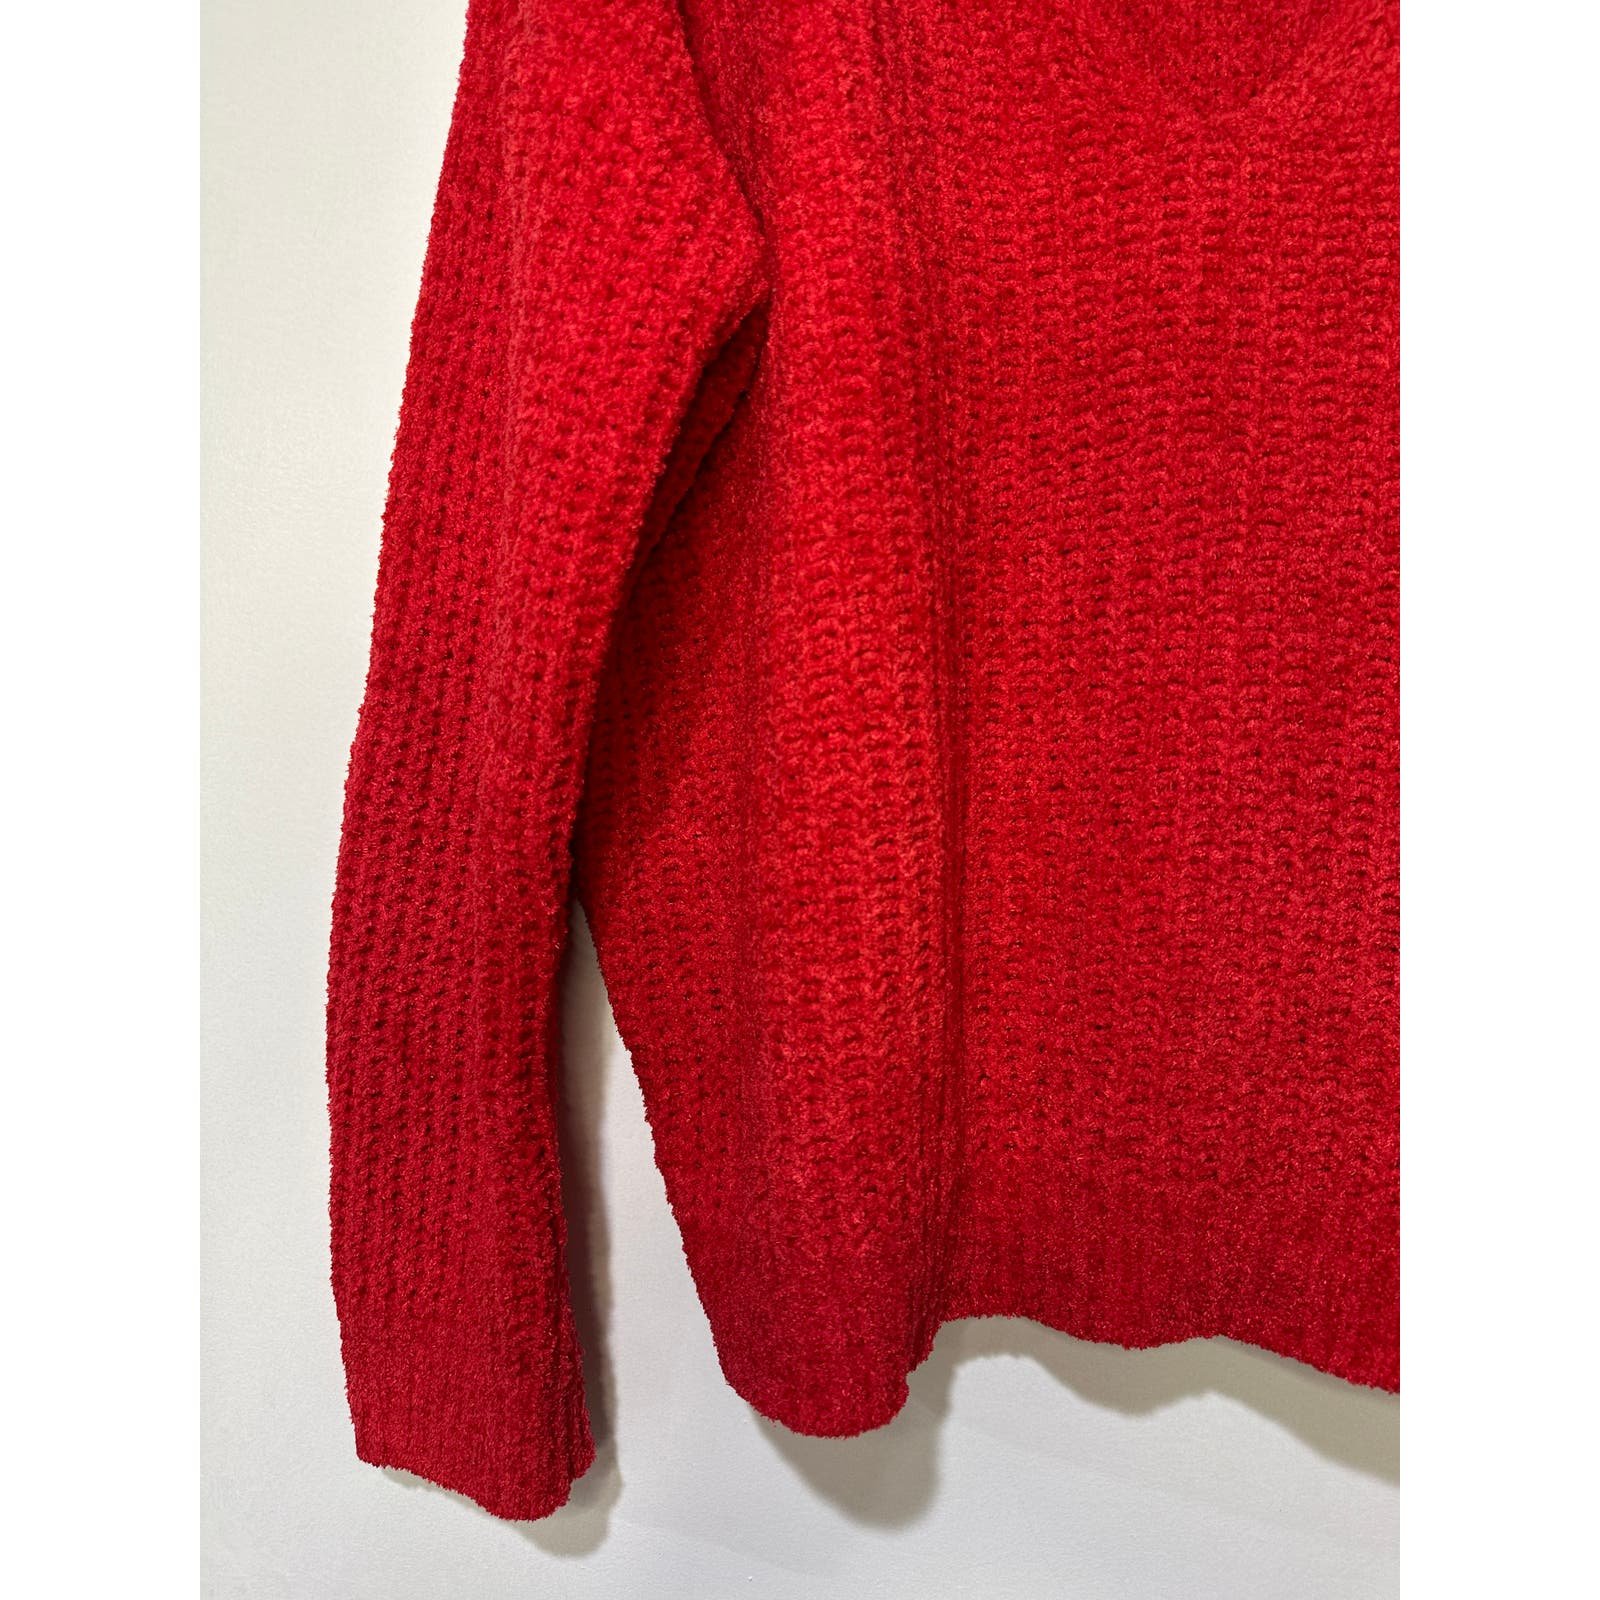 Stylish Express V-Neck Red Sweater Long Sleeves Oversized Size Large New w/ Tags OIEkFEyRC Great